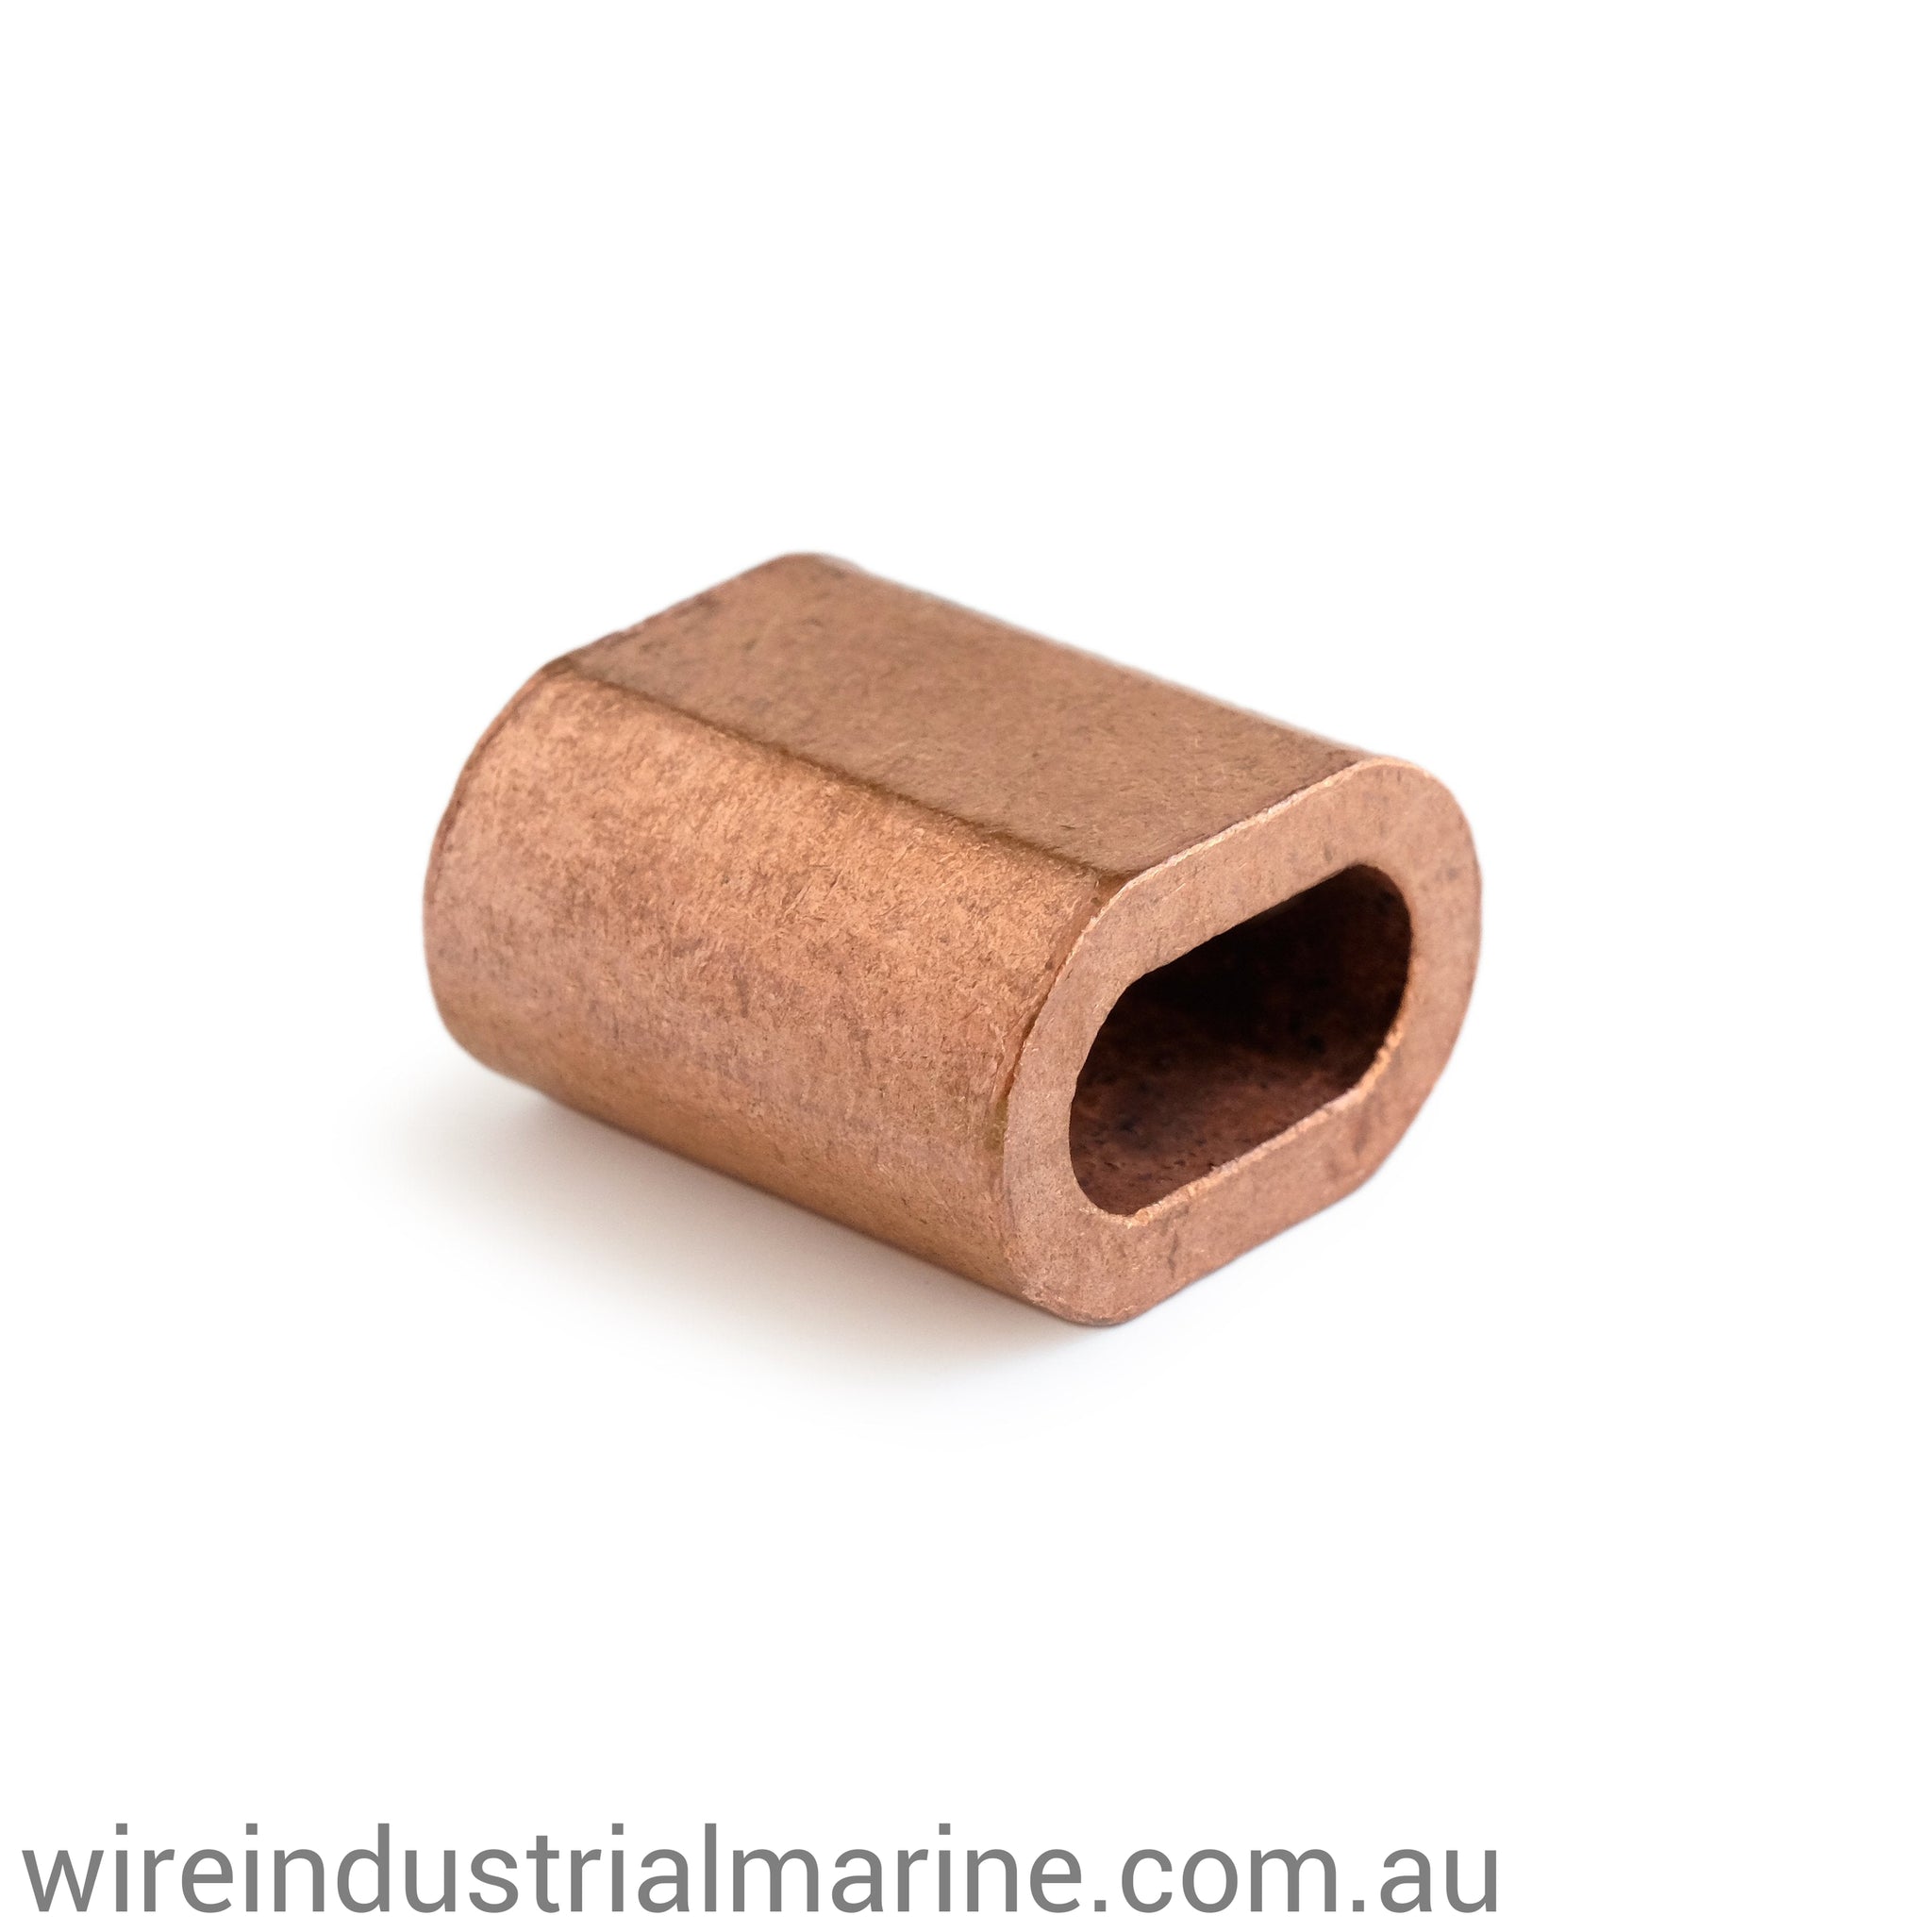 6mm - Copper - DIN Code machine press ferrule for stainless steel wire-wireindustrialmarine